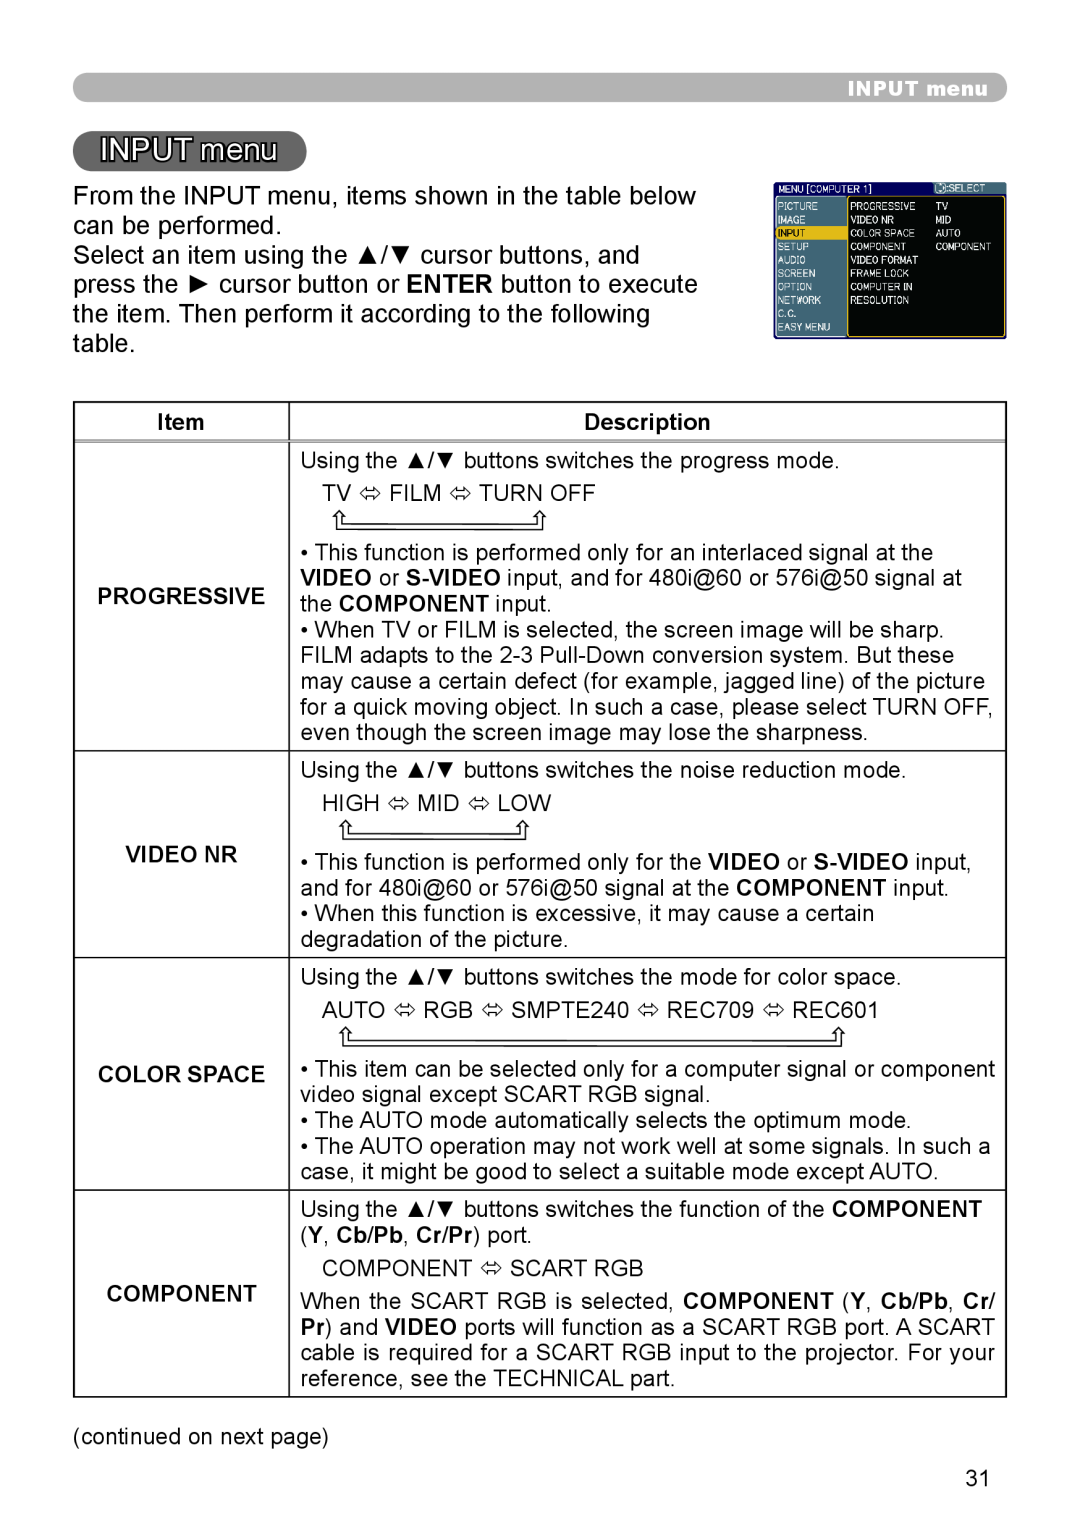 Hitachi CP-X306, CP-X206 user manual INPUT menu, Description, Progressive, Video Nr, Color Space 